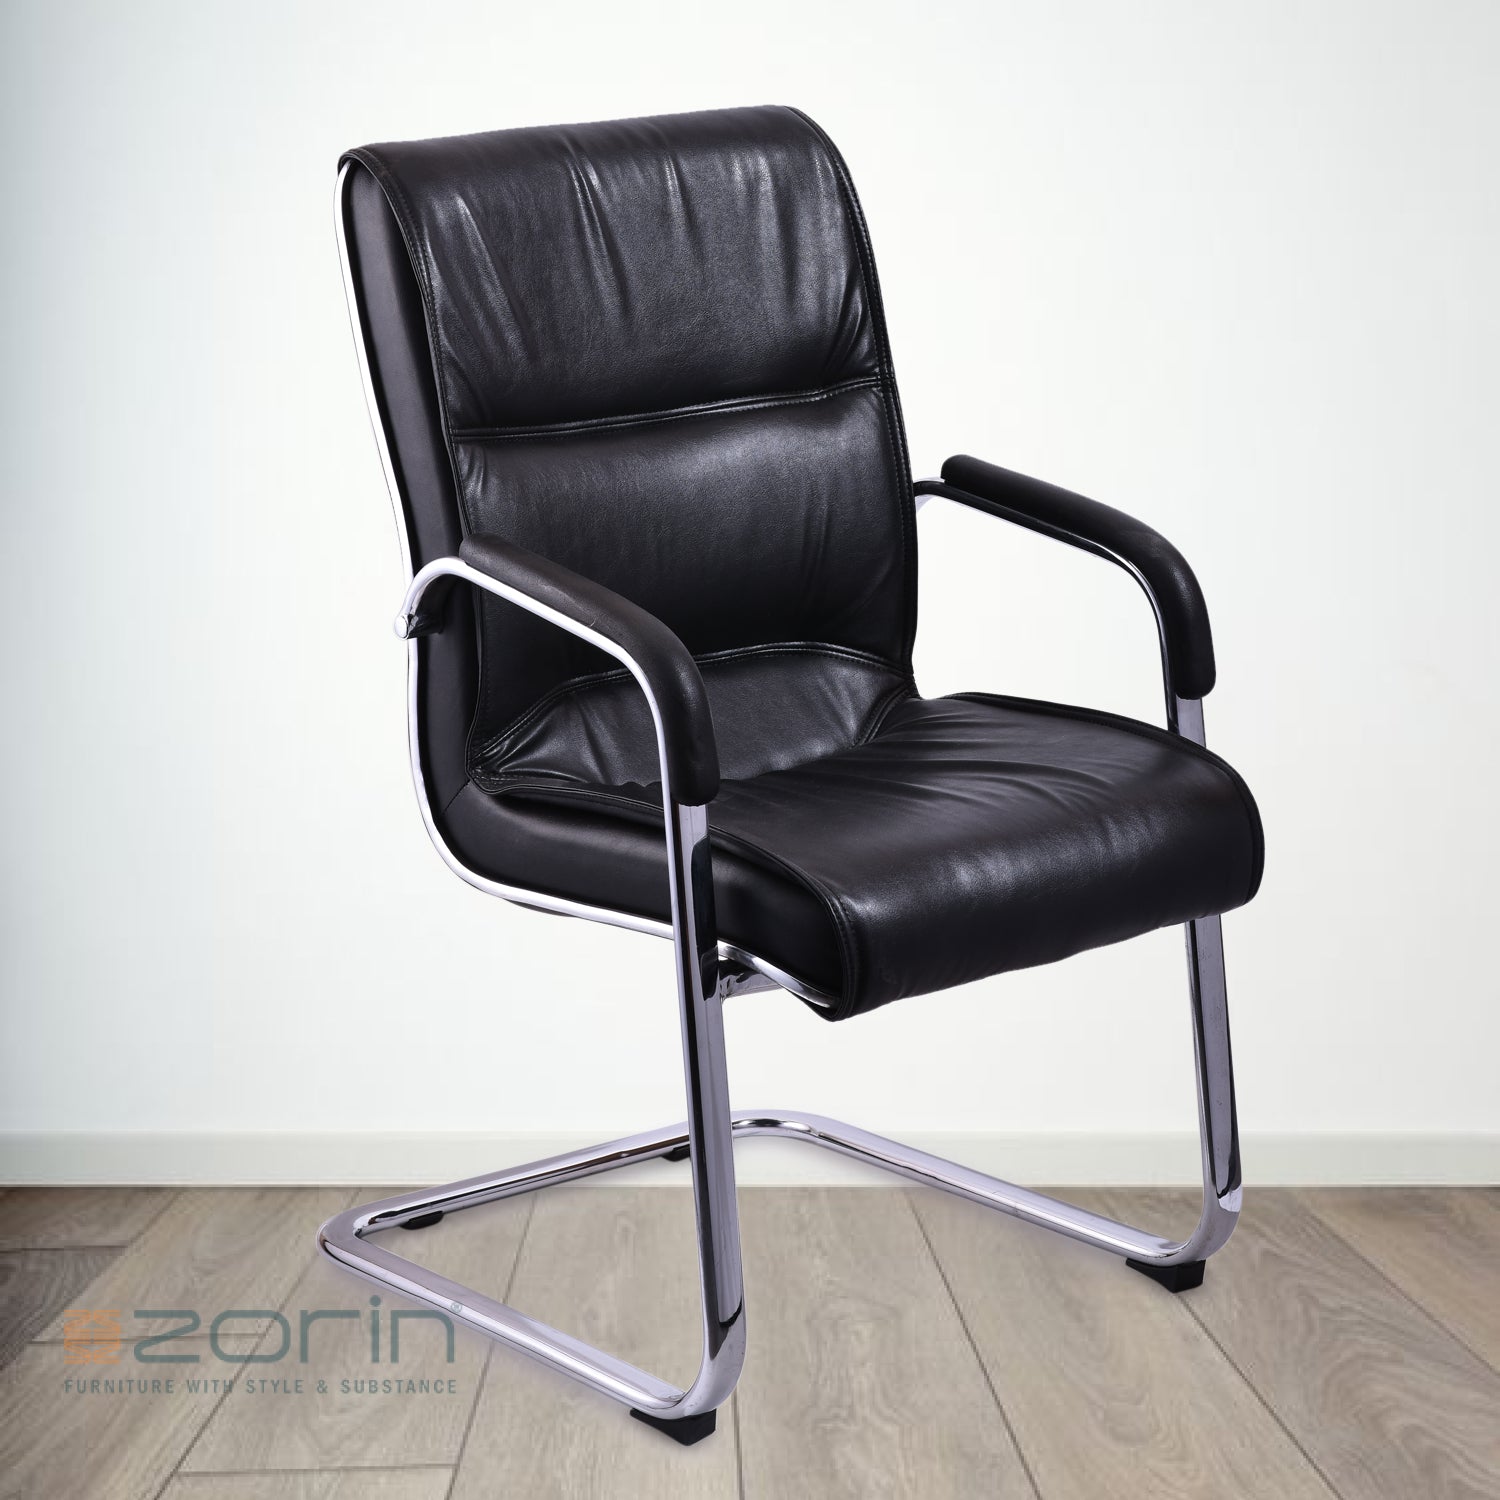 ZSV1061 Medium Back Chair by Zorin in Black Color Zorin